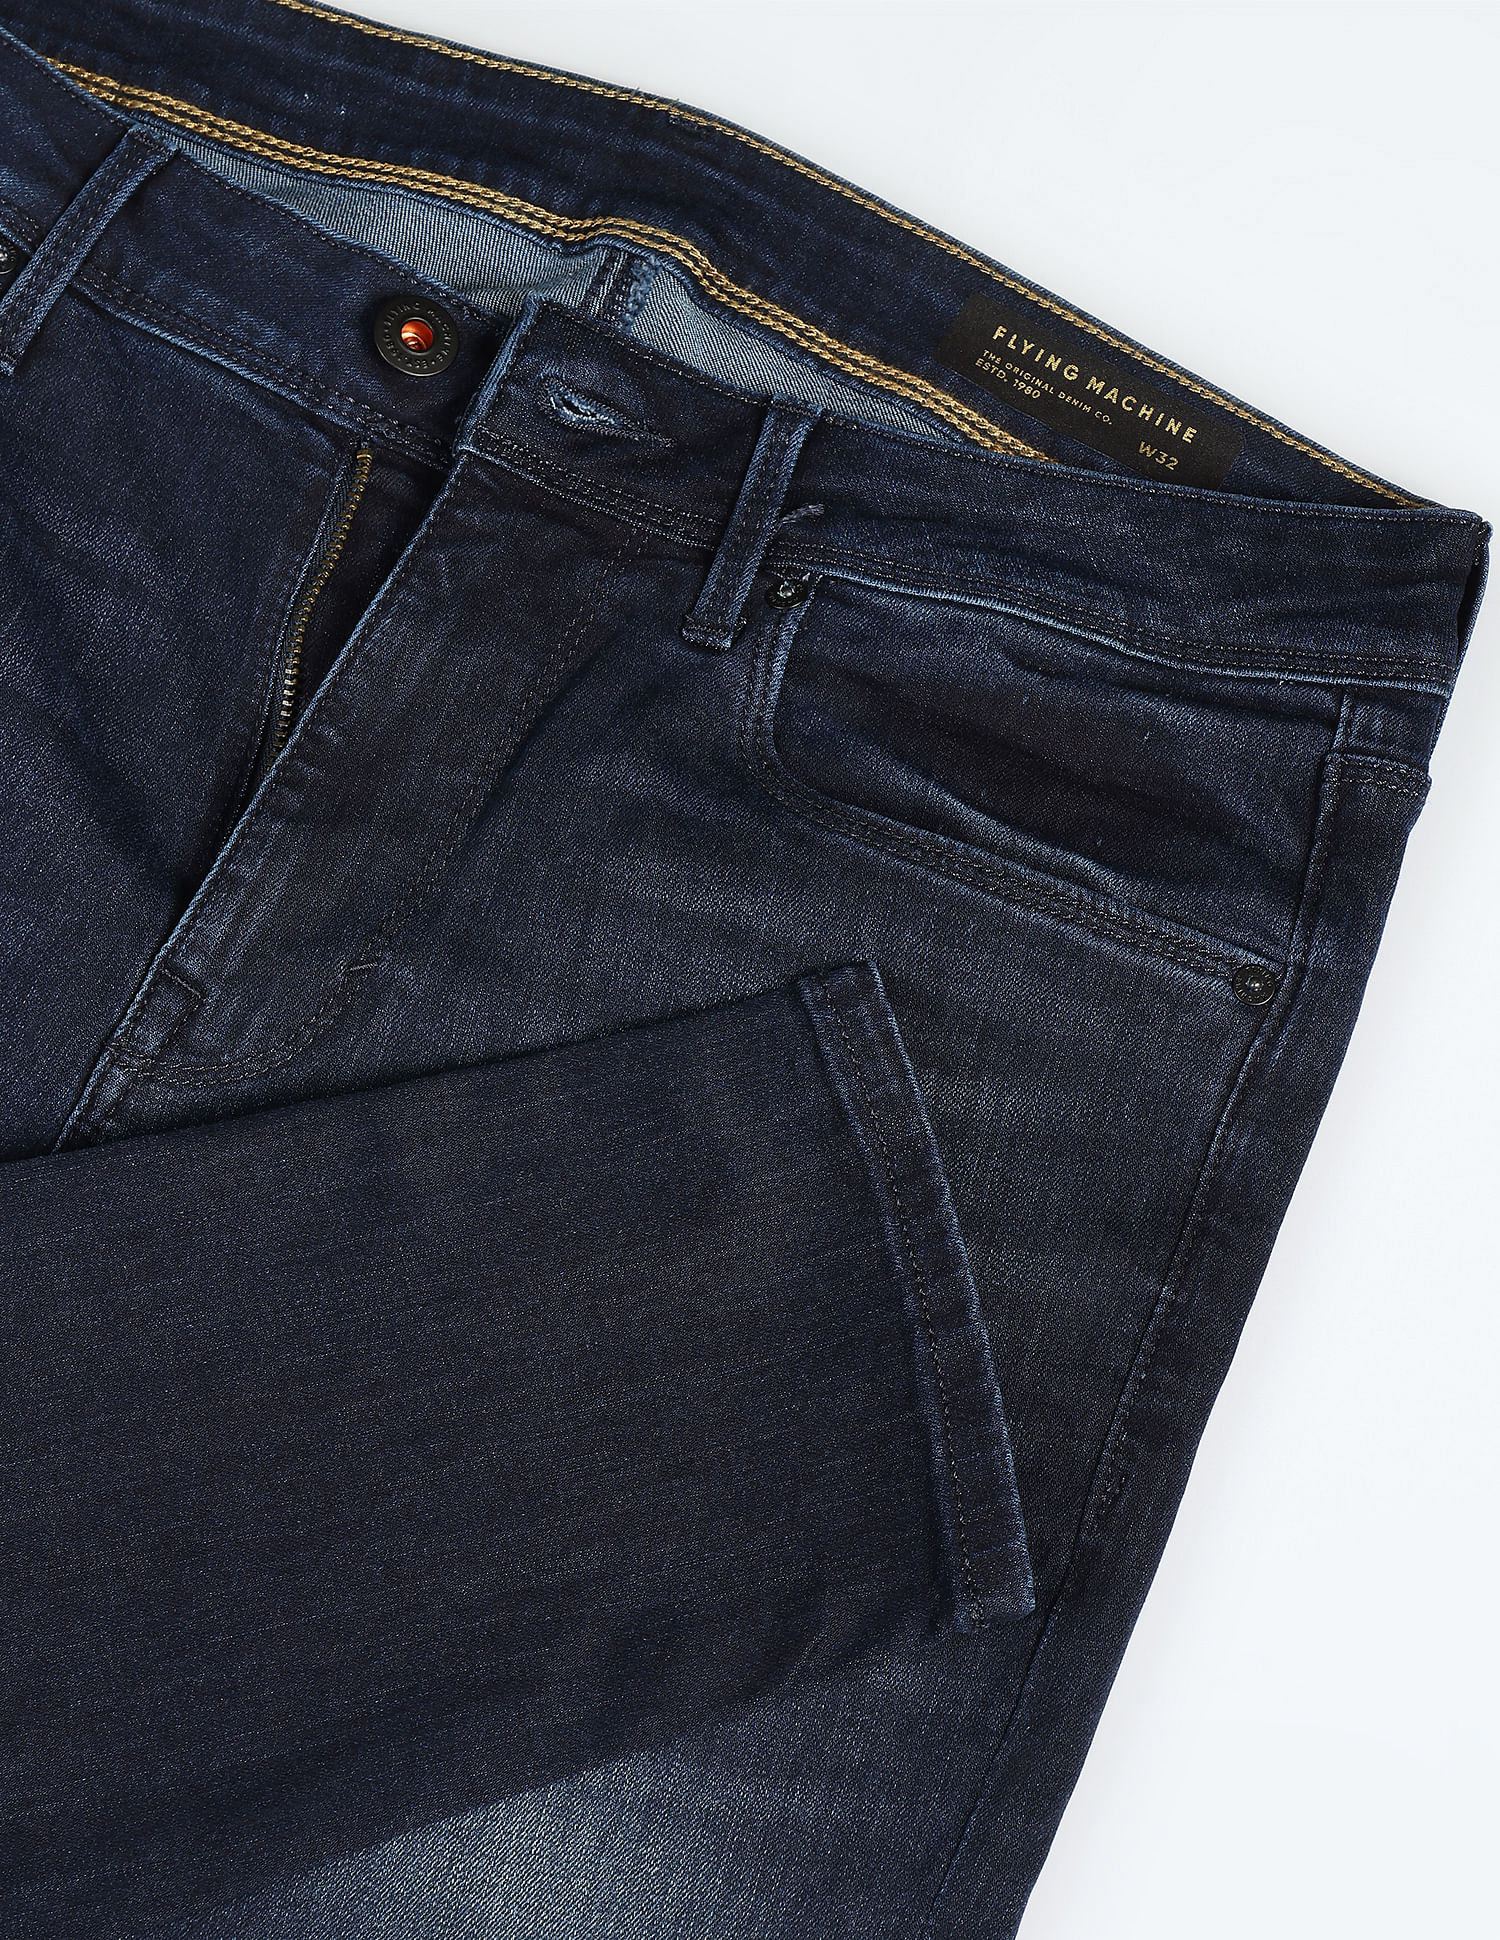 Gap Denim Jeans Pants Stretch Medium Wash Women's Size 26 Regular - Swedemom